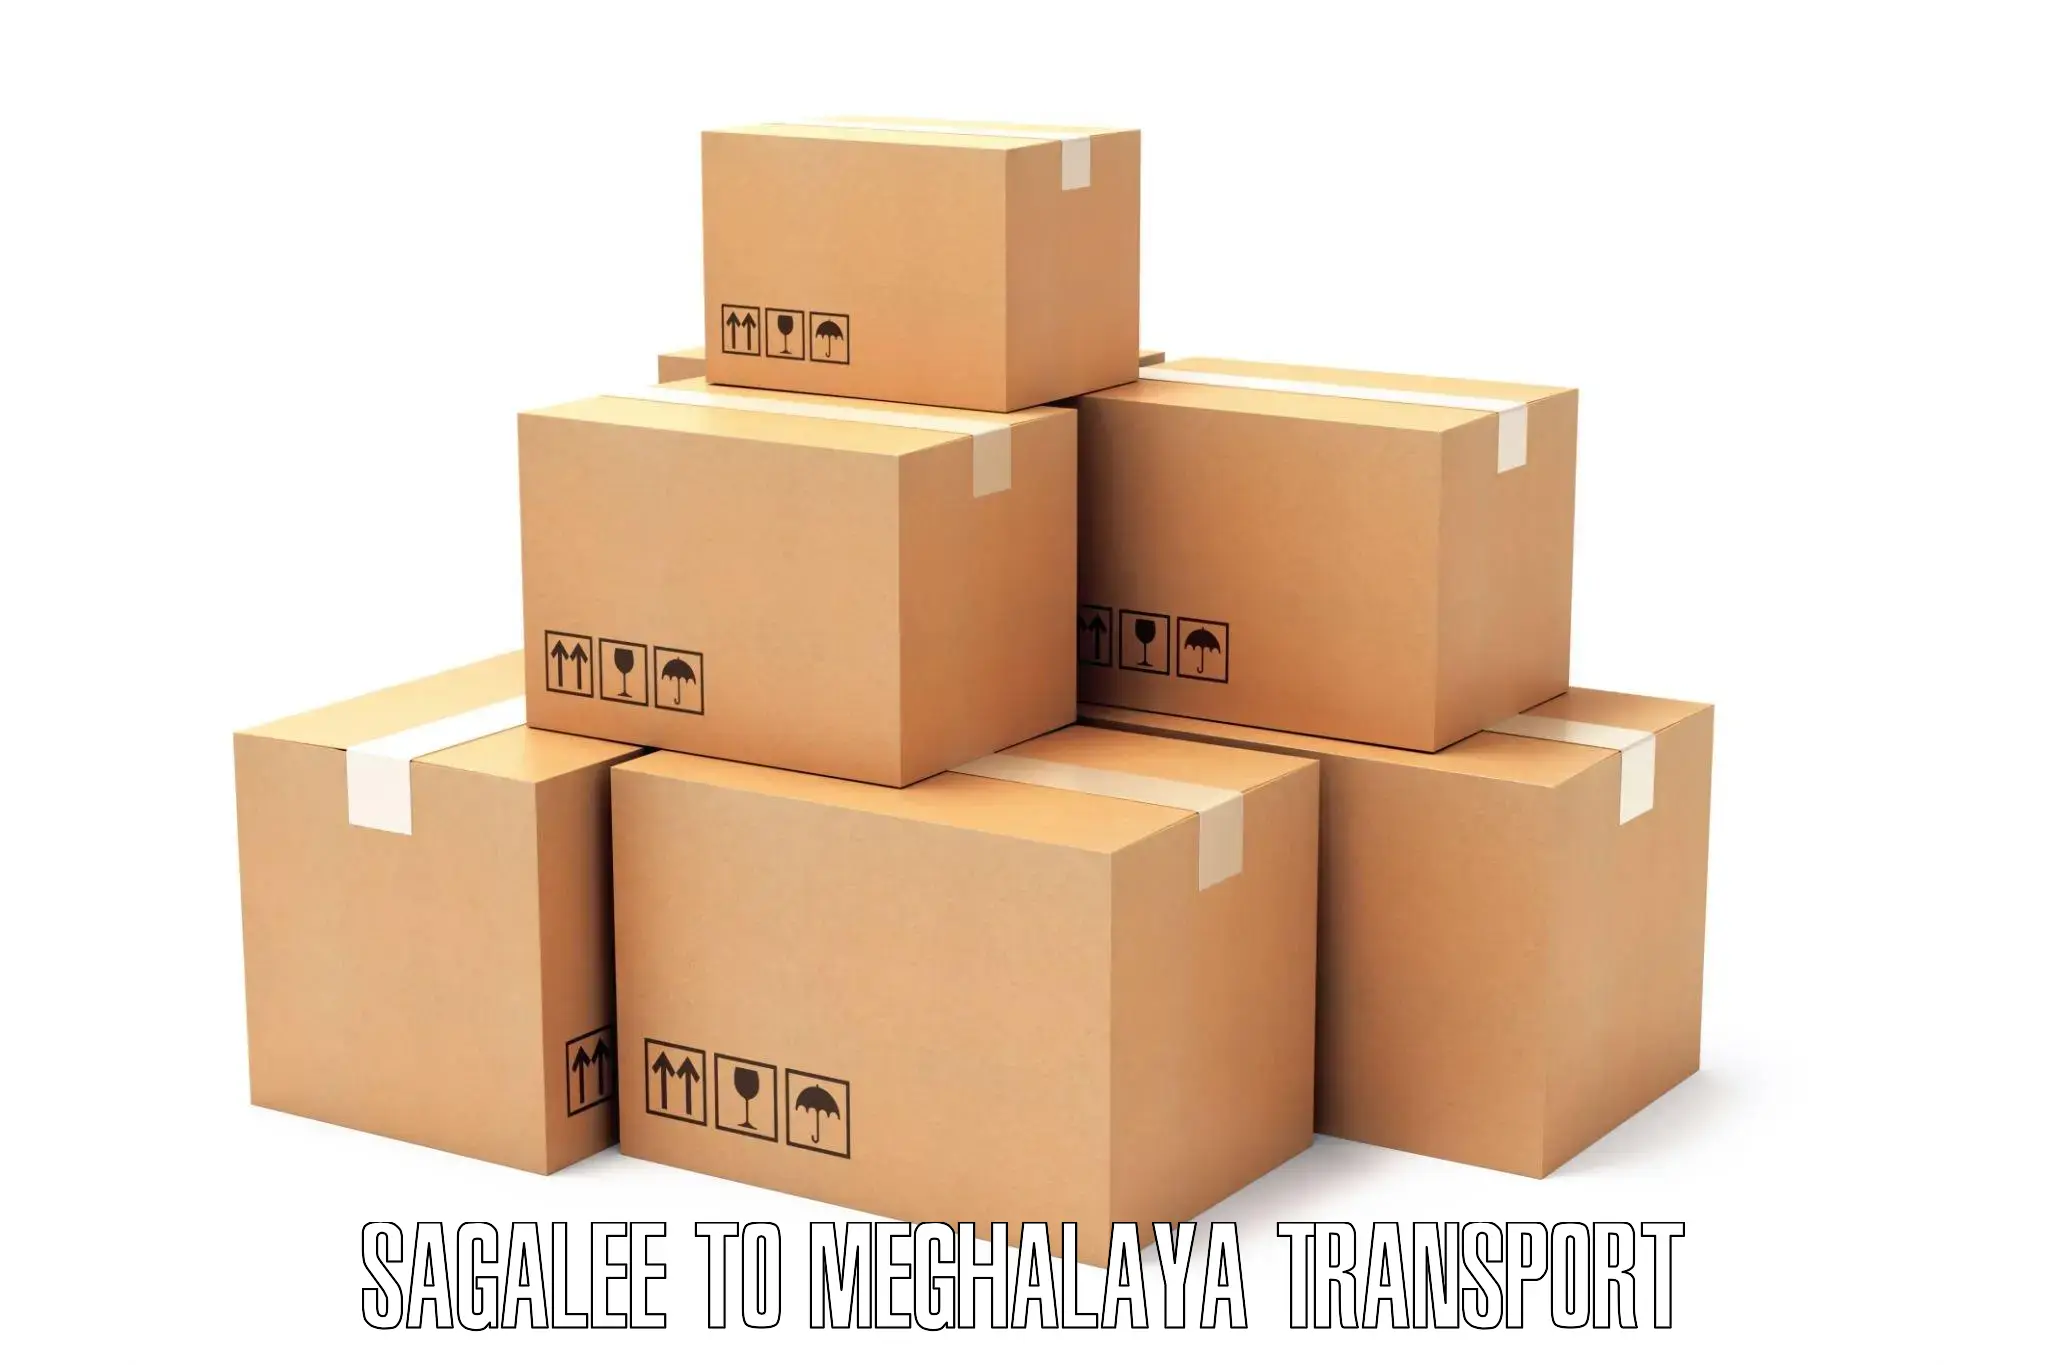 Bike shipping service Sagalee to Meghalaya